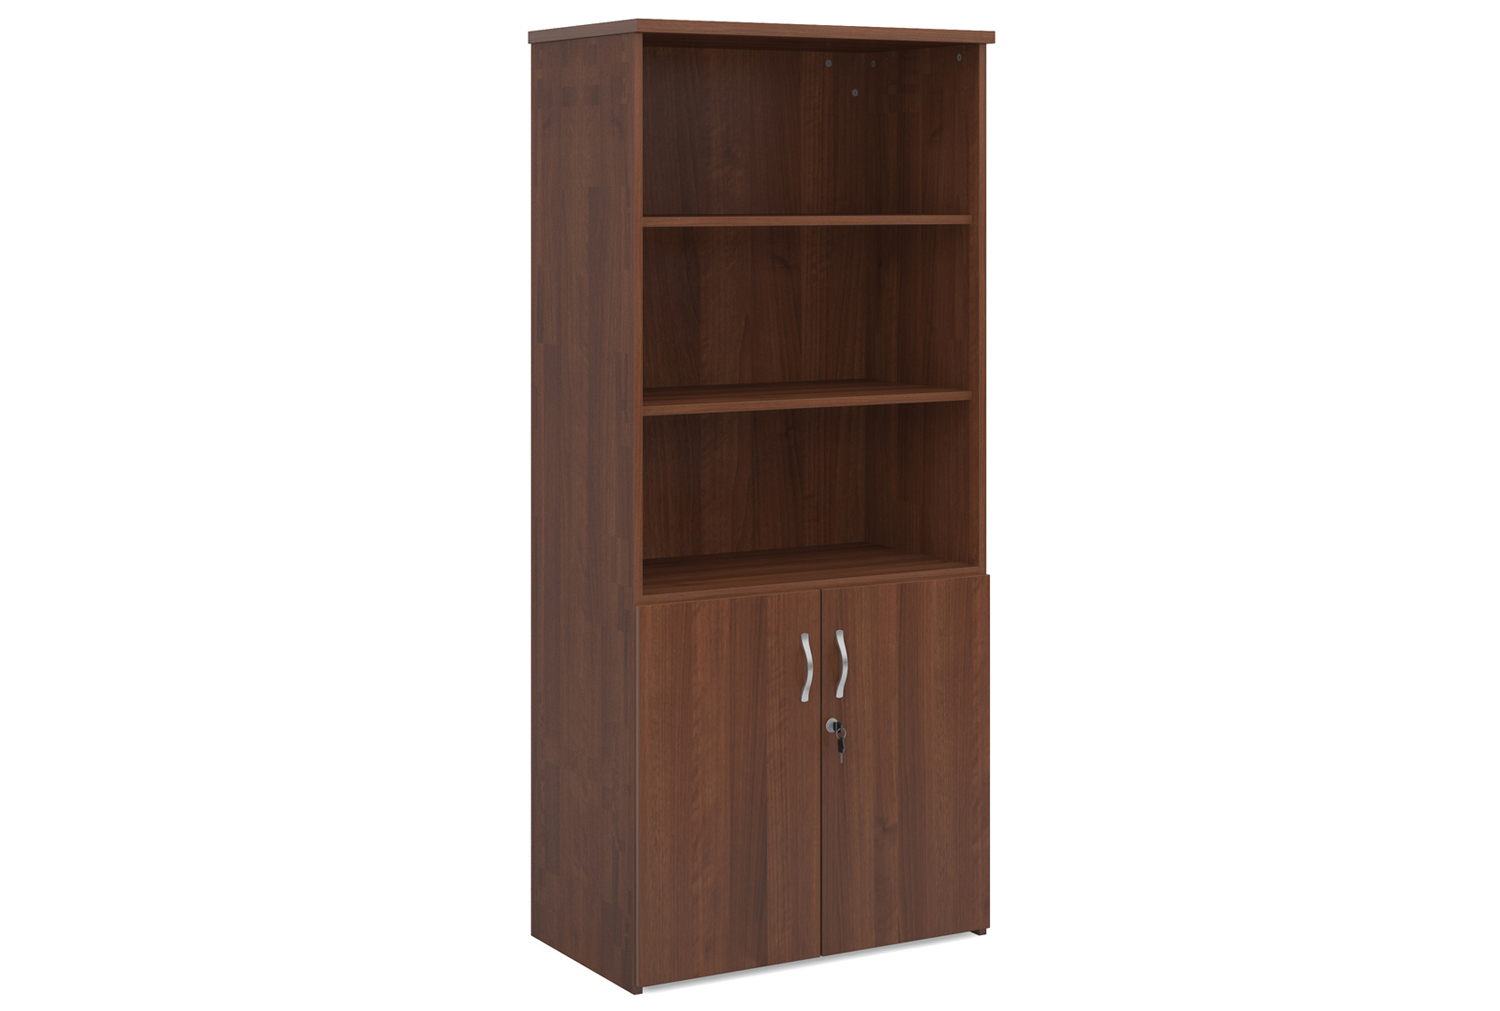 All Walnut Open Top Office Cupboards, 4 Shelf - 80wx47dx179h (cm), Fully Installed